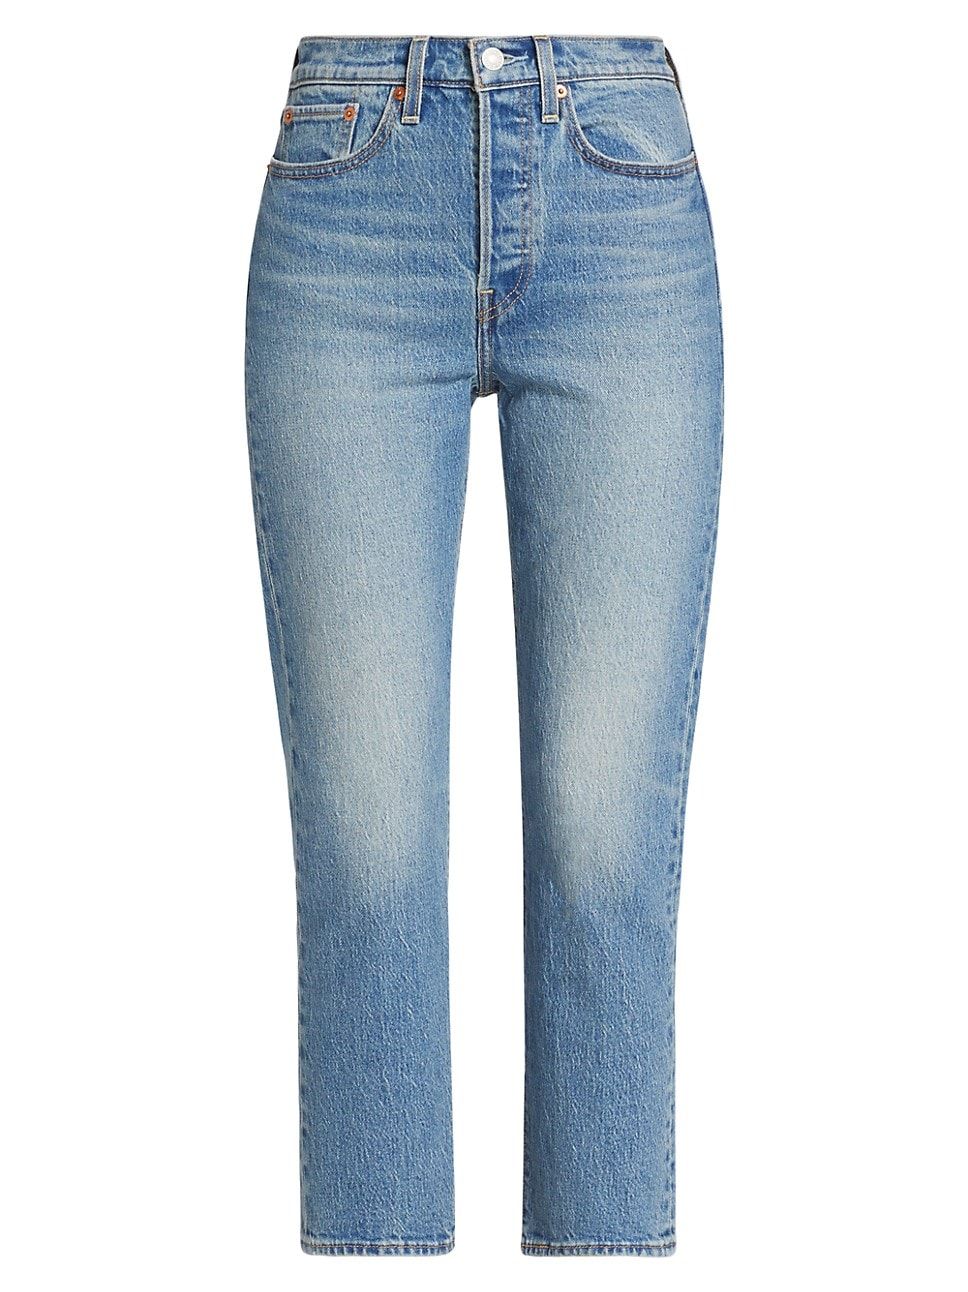 Wedgie Straight-Leg Jeans | Saks Fifth Avenue